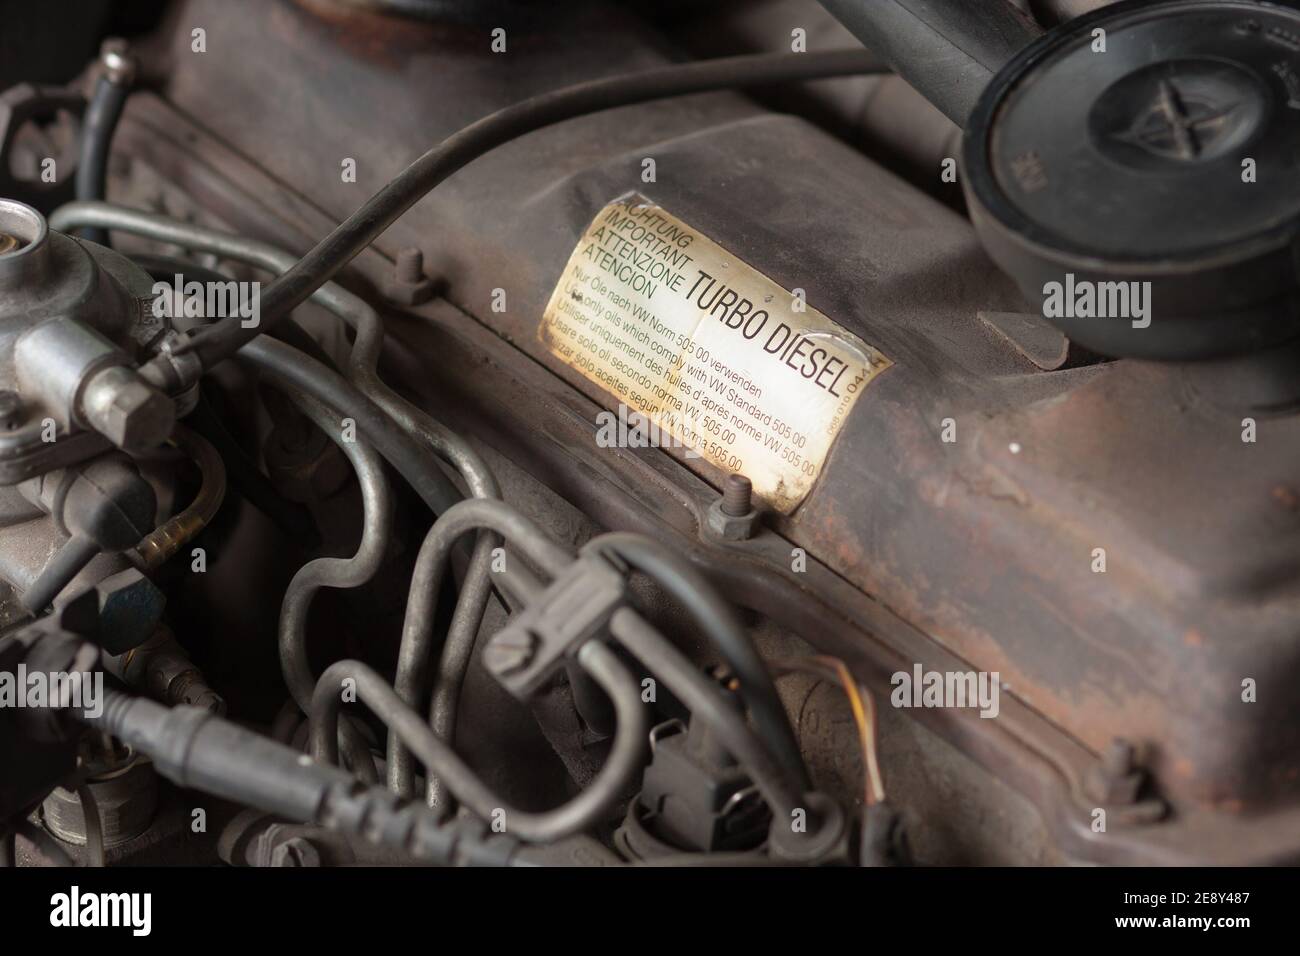 Gdansk, Poland - June 12, 2012. Old volkswagen engine with label turbo diesel Stock Photo